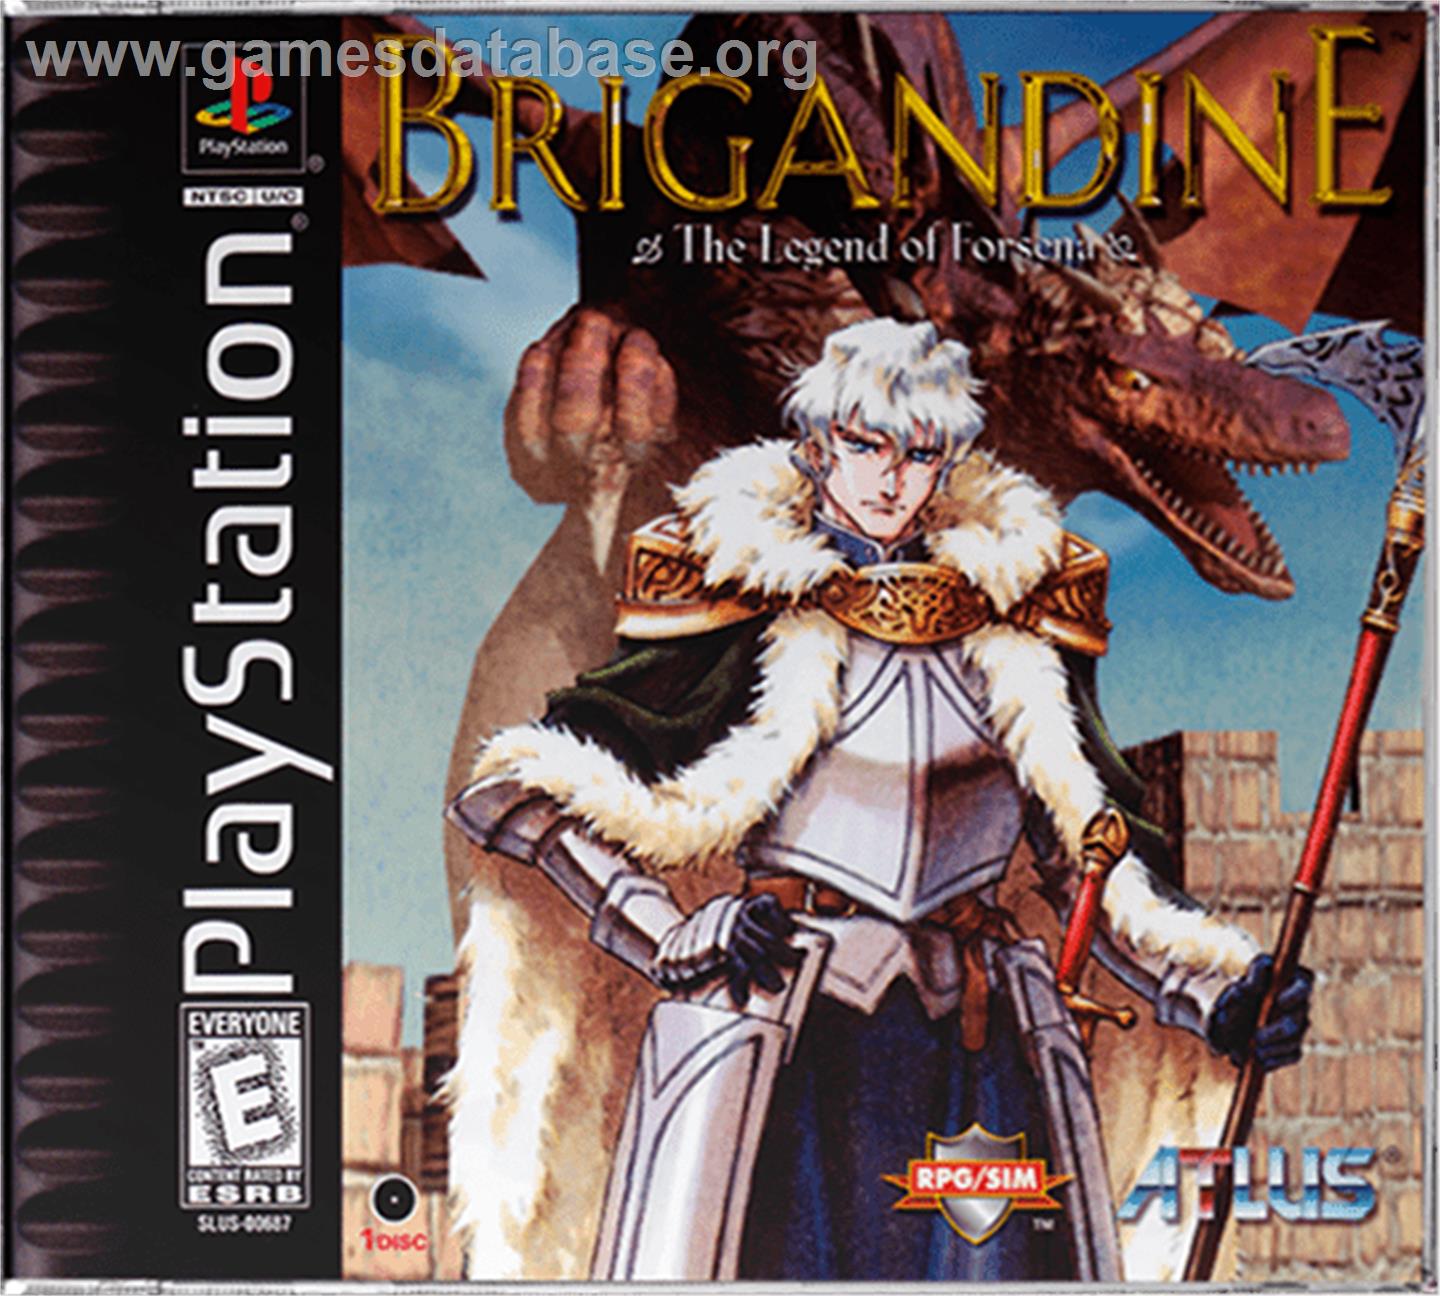 Brigandine: The Legend of Forsena - Sony Playstation - Artwork - Box